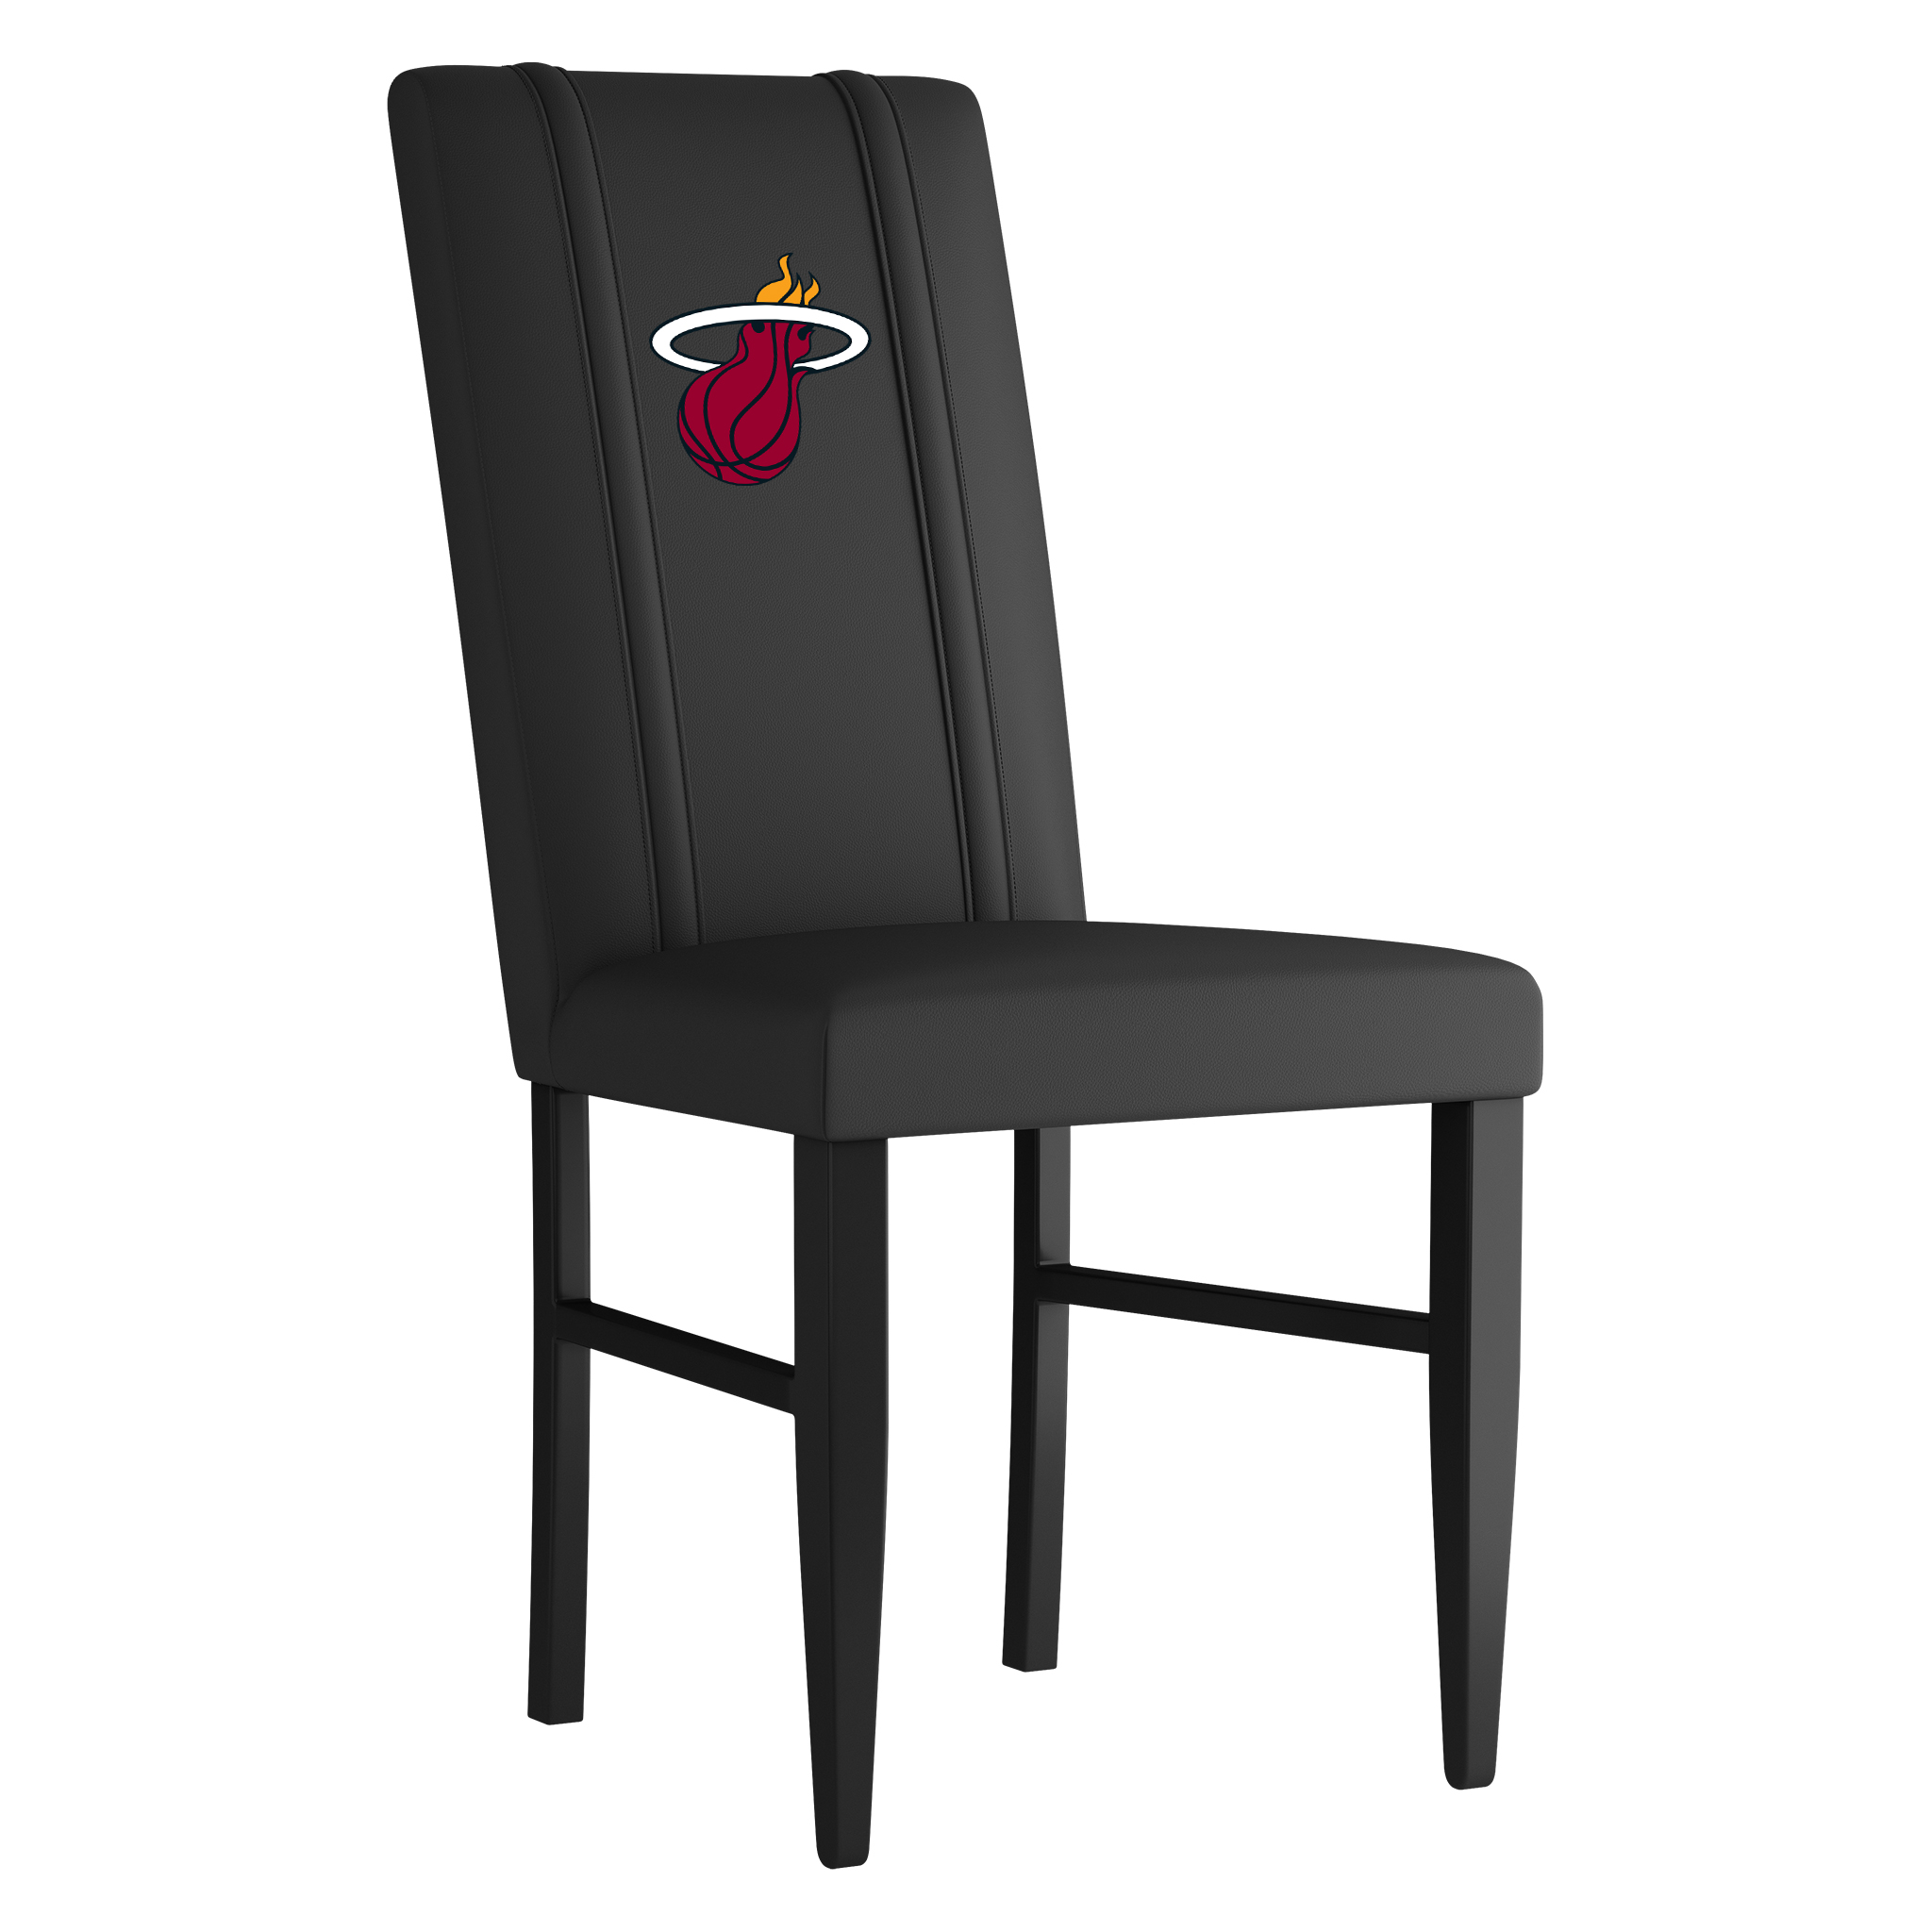 Miami Heat Side Chair 2000 Miami Heat Logo 1